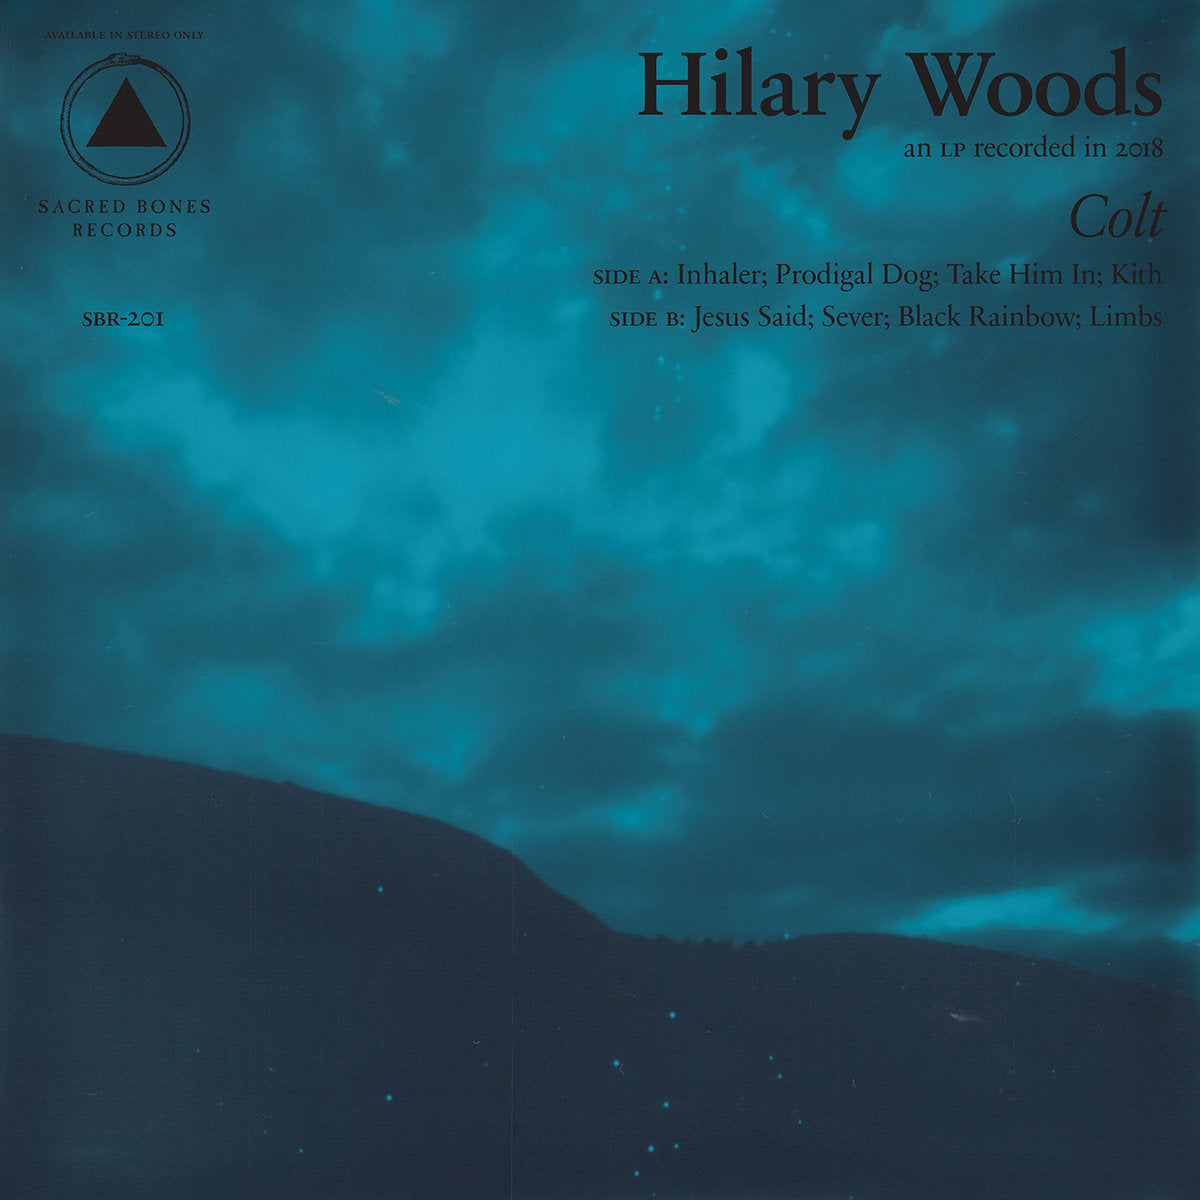 Hilary Woods - Colt (Black Vinyl)